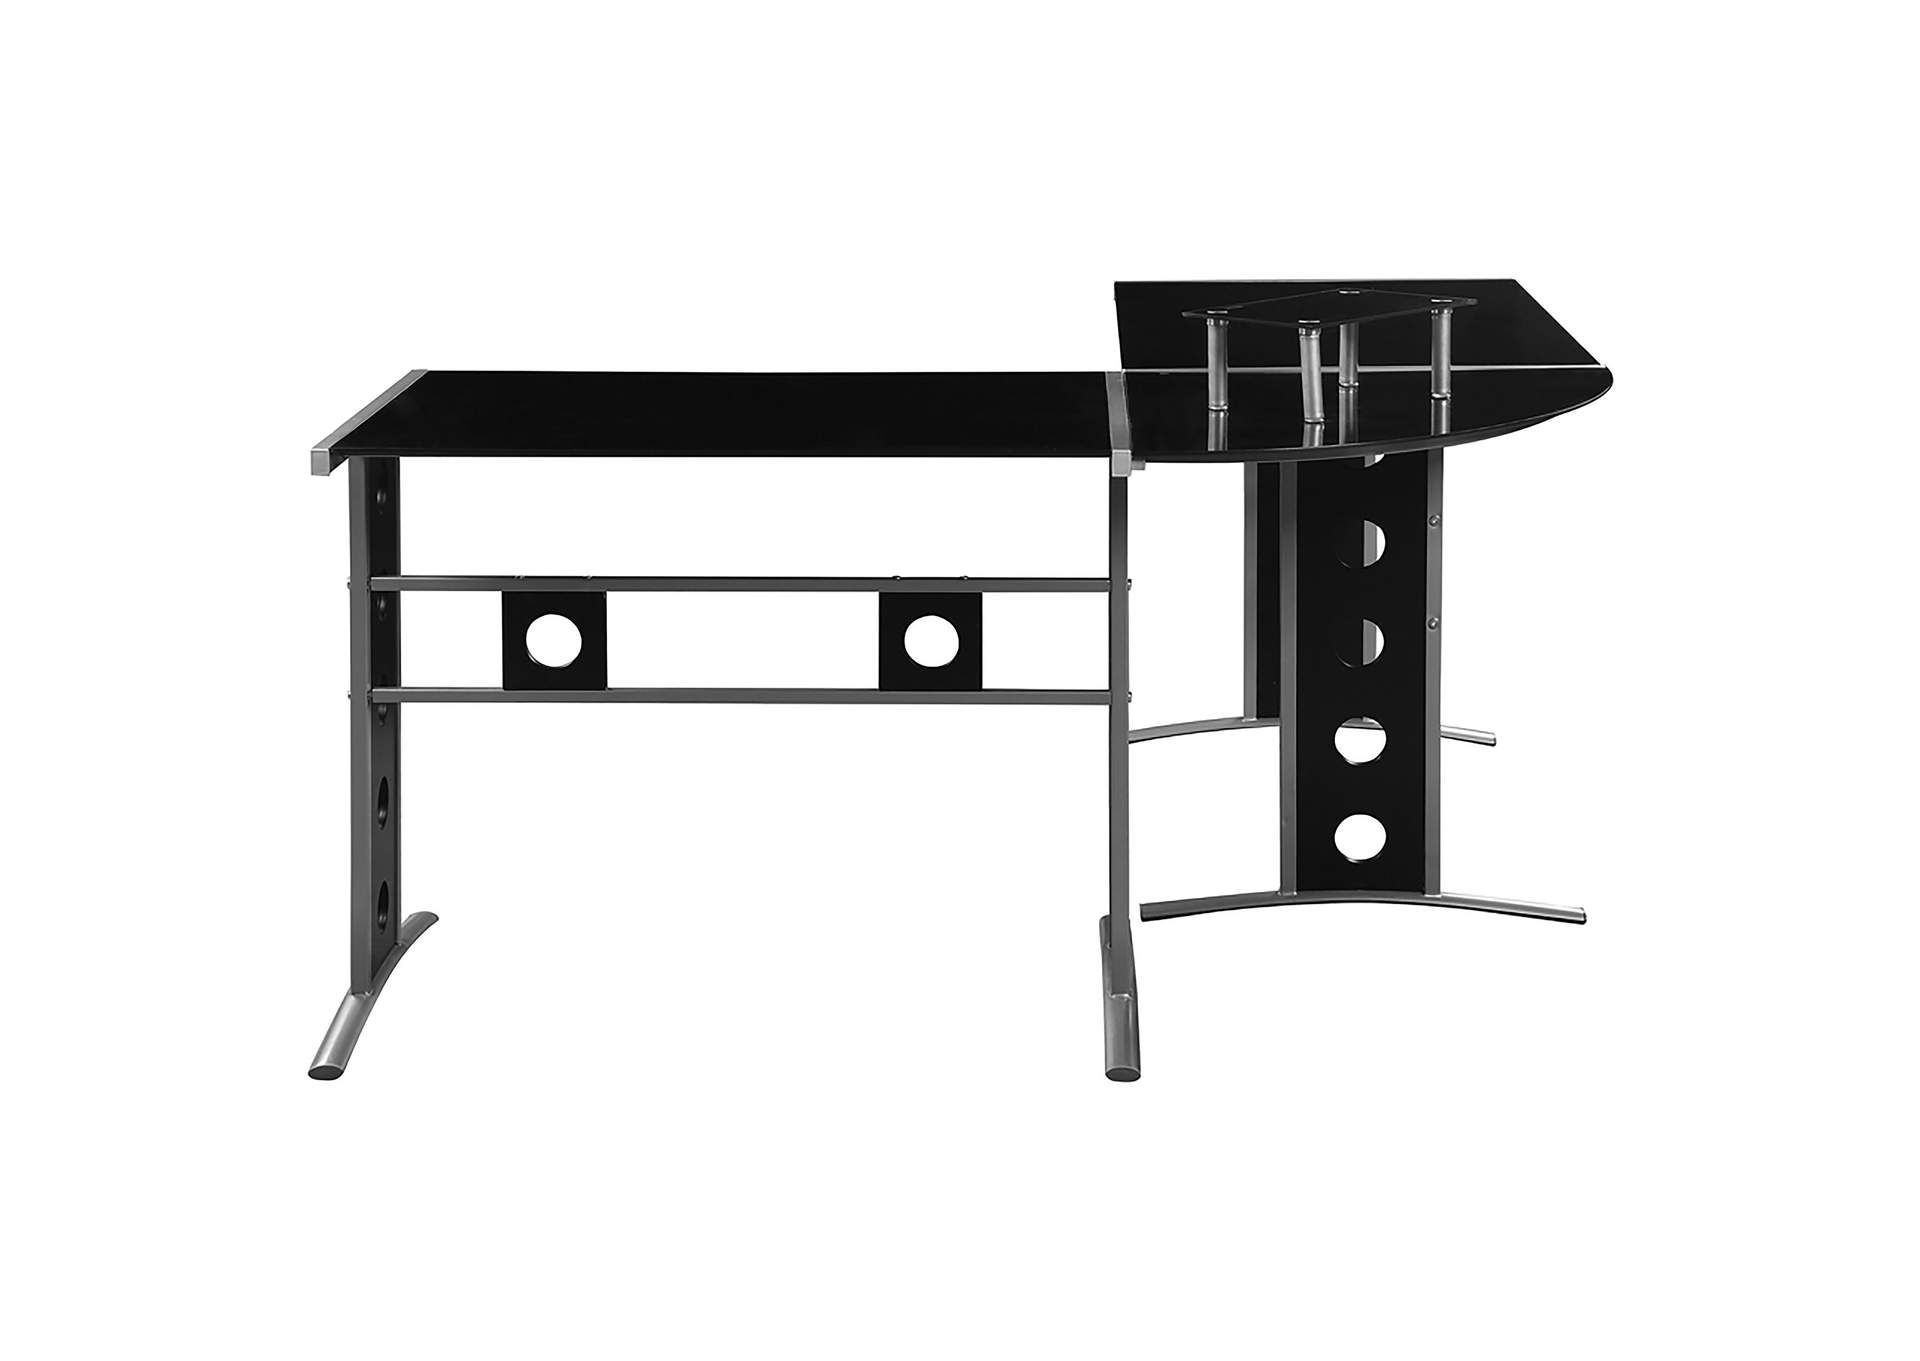 Keizer 3-piece L-shape Office Desk Set Black and Silver,Coaster Furniture